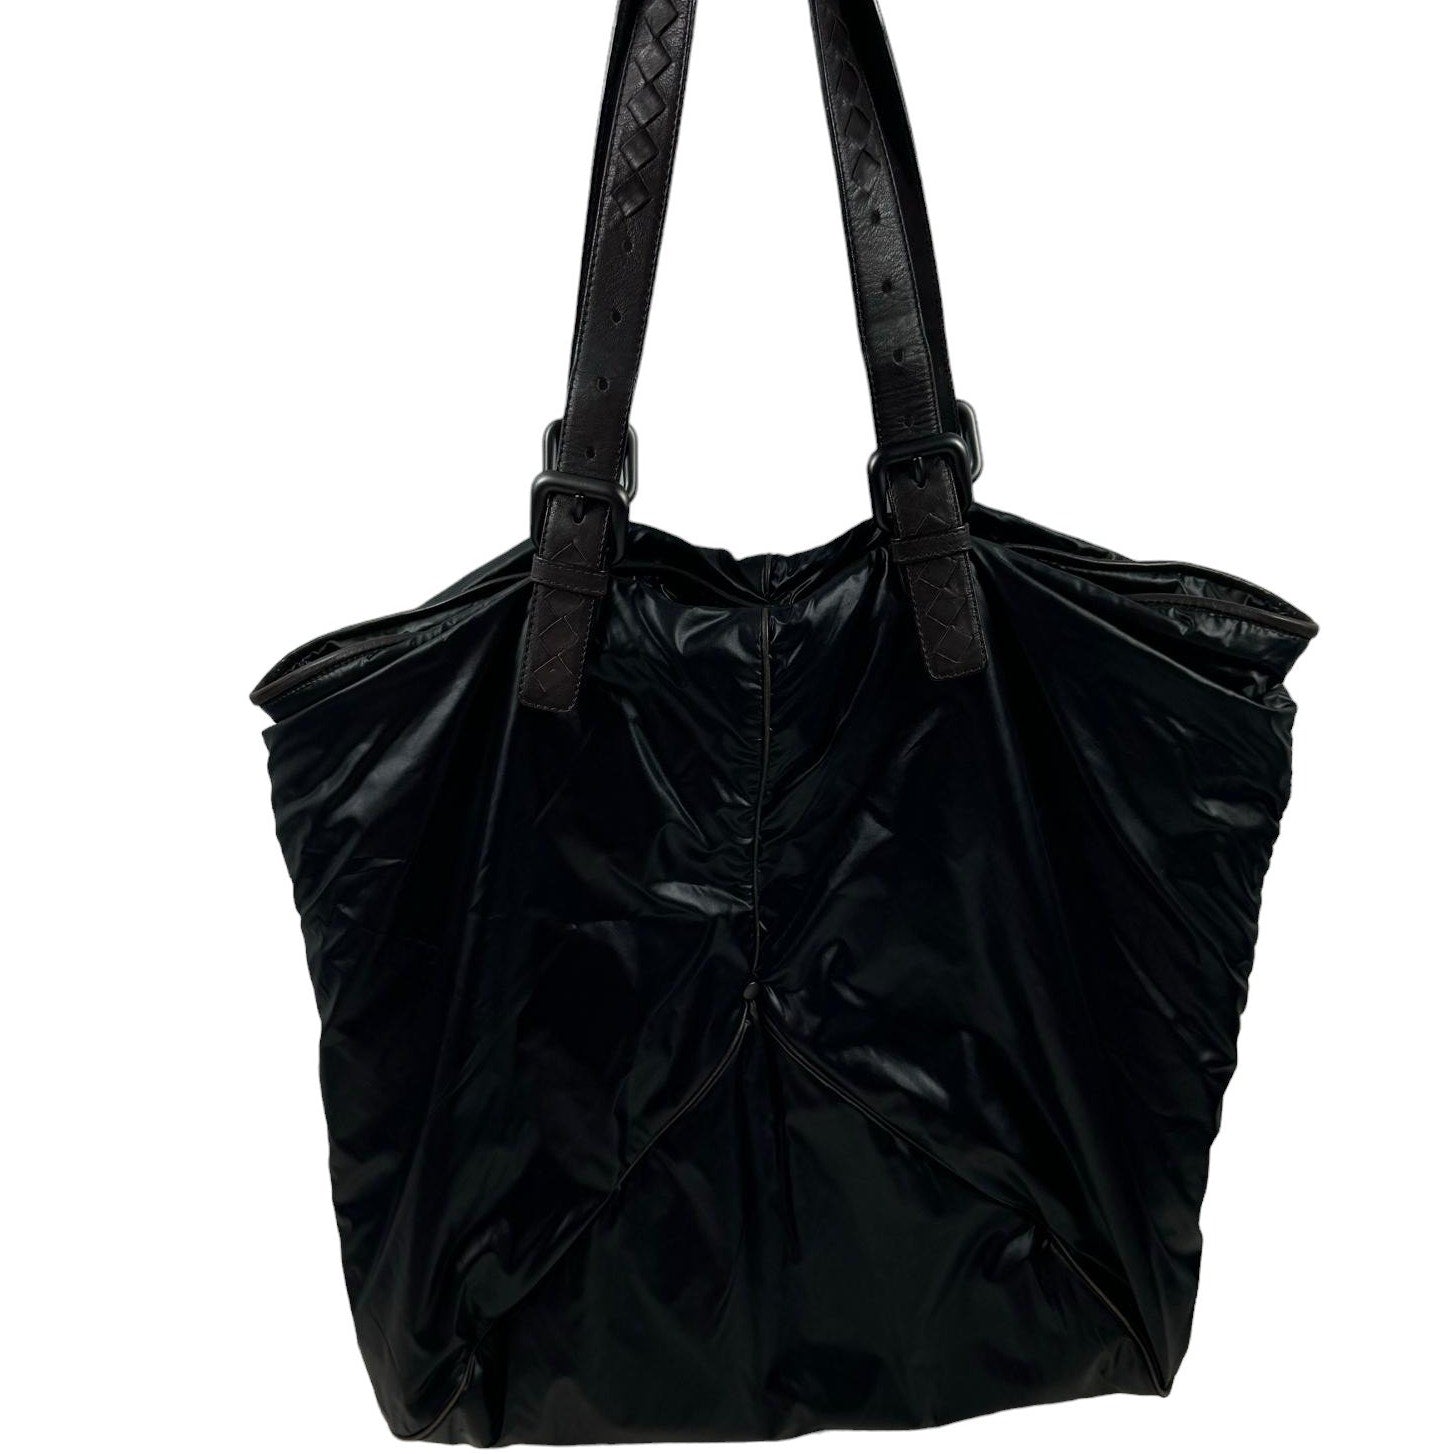 Authentic Bottega Veneta Shoulder Bag Black Extra Large